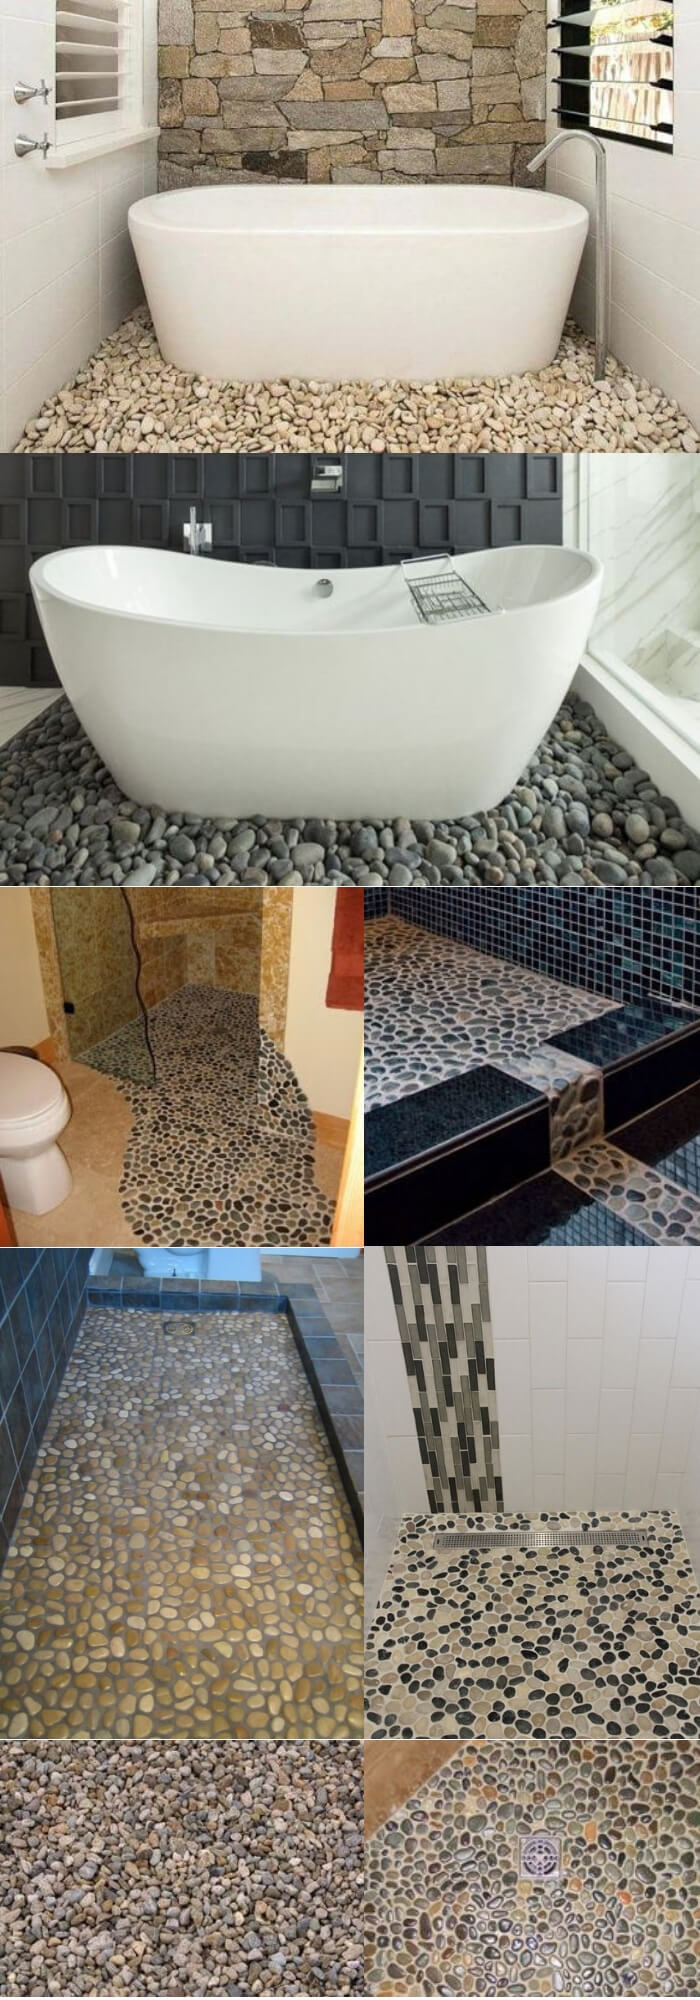 Gravel bathroom floor tile ideas